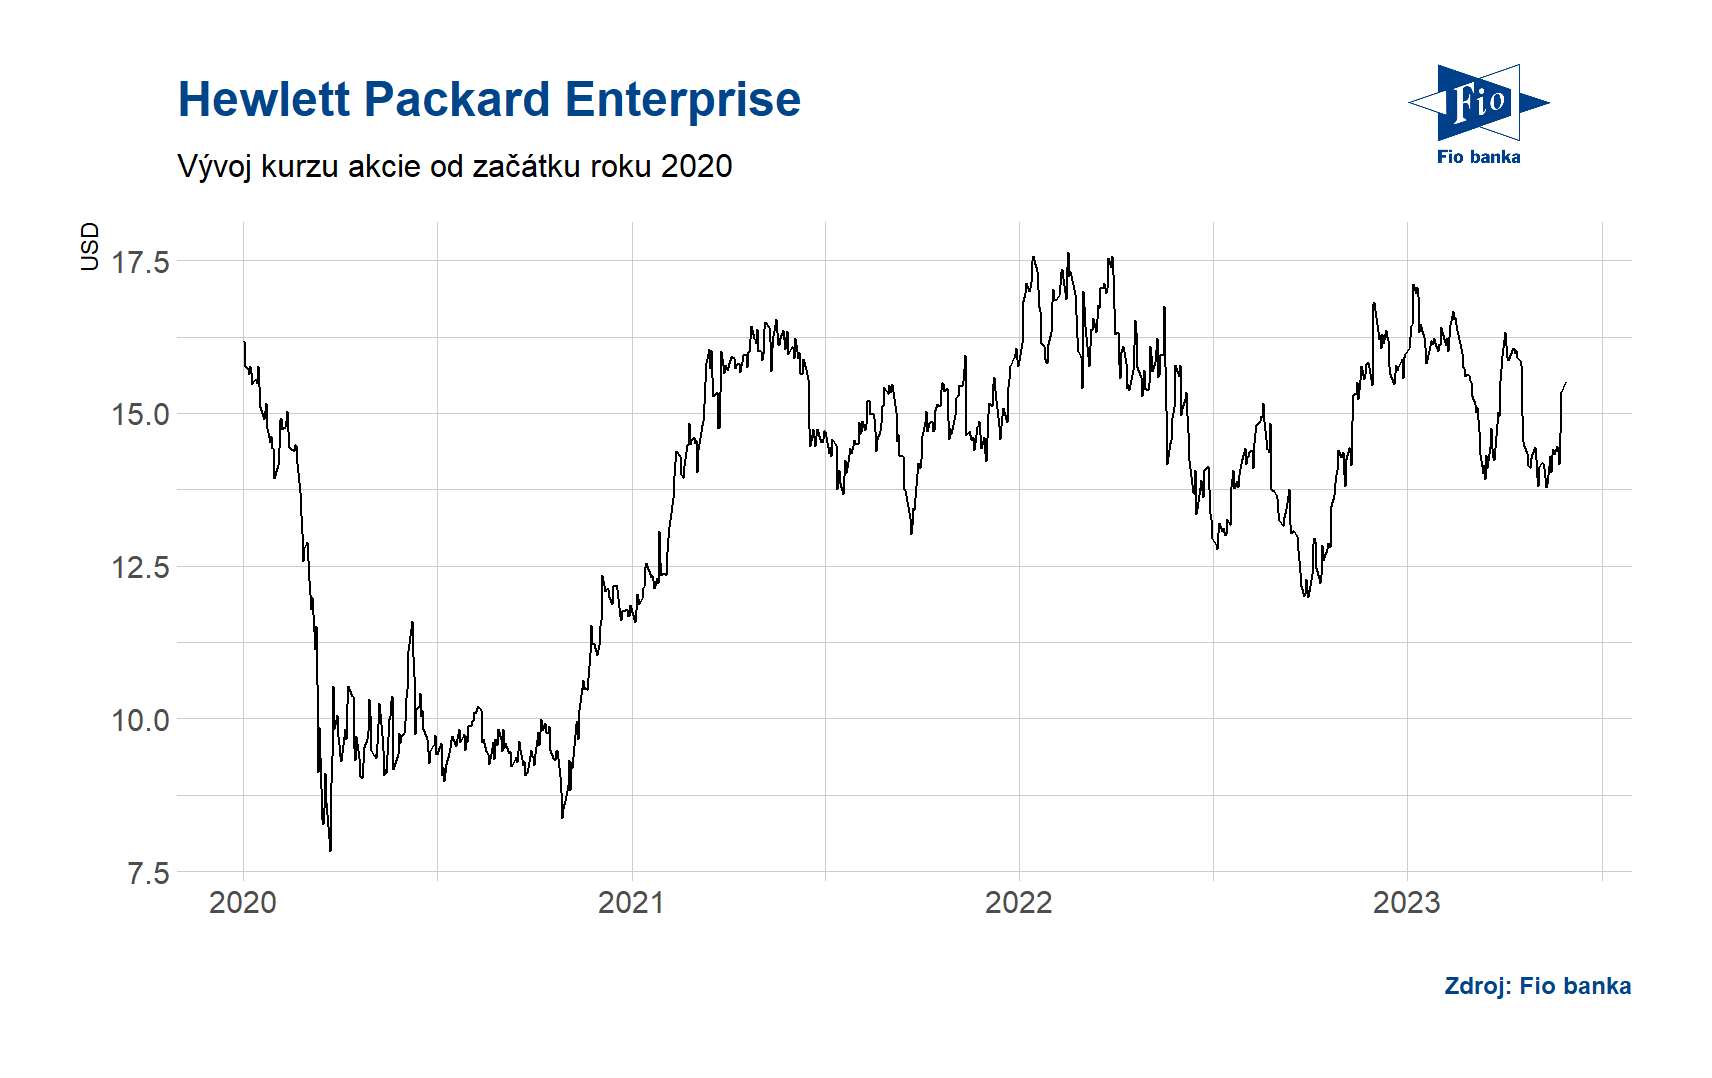 Vývoj akcie Hewlett Packard Enterprise